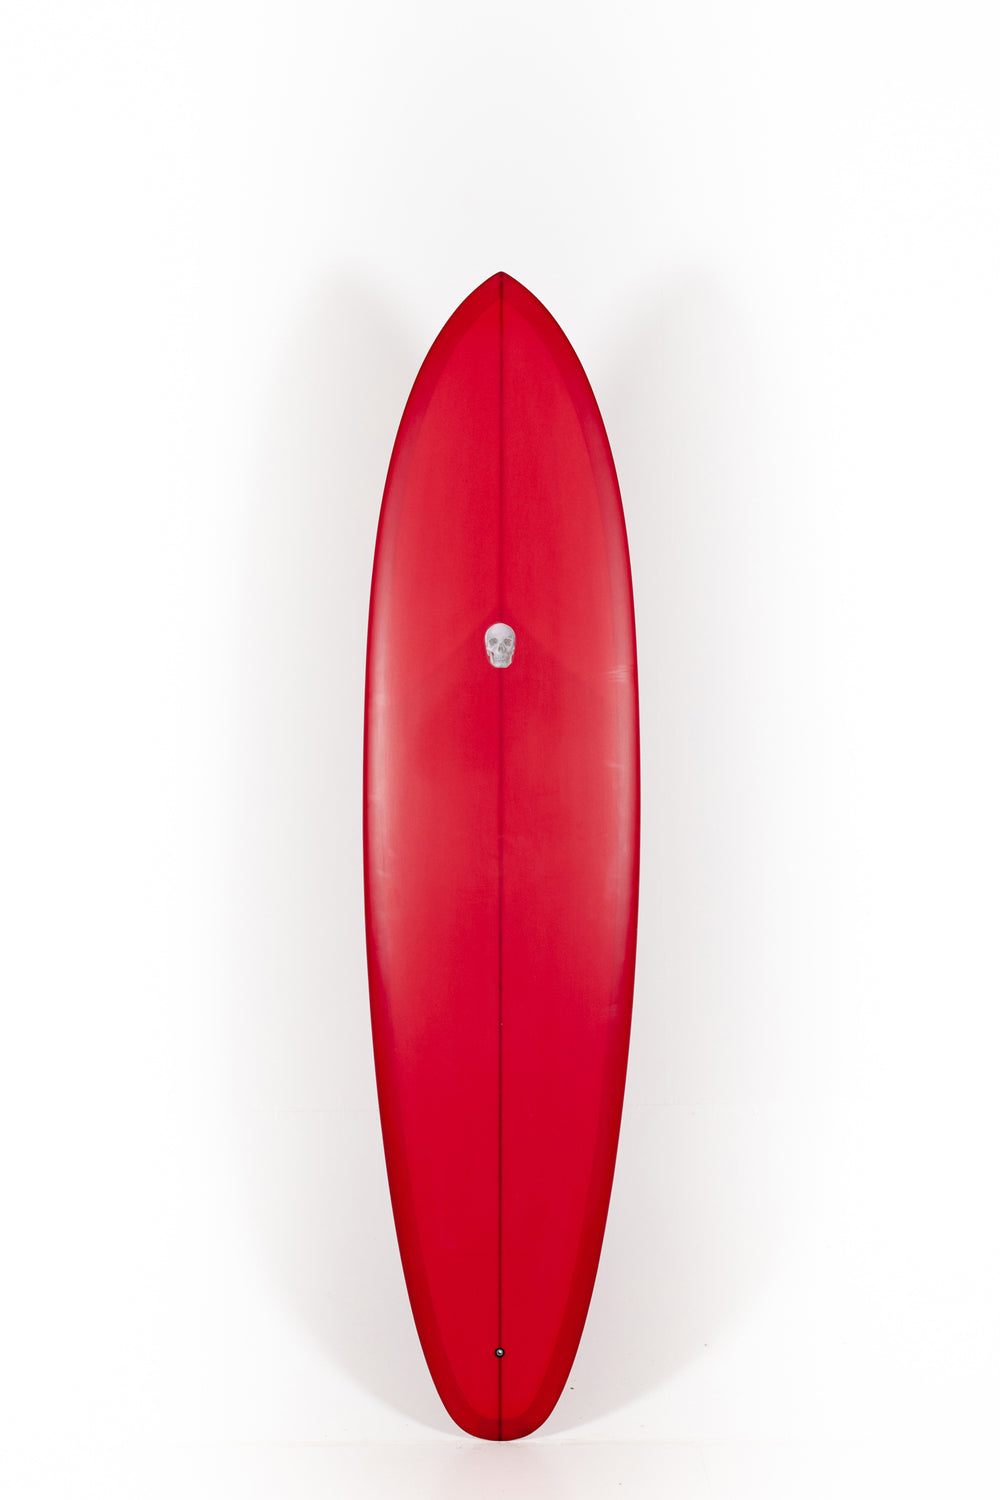 Pukas Surf Shop - Christenson Surfboards - FLAT TRACKER 2.0 - 7'4